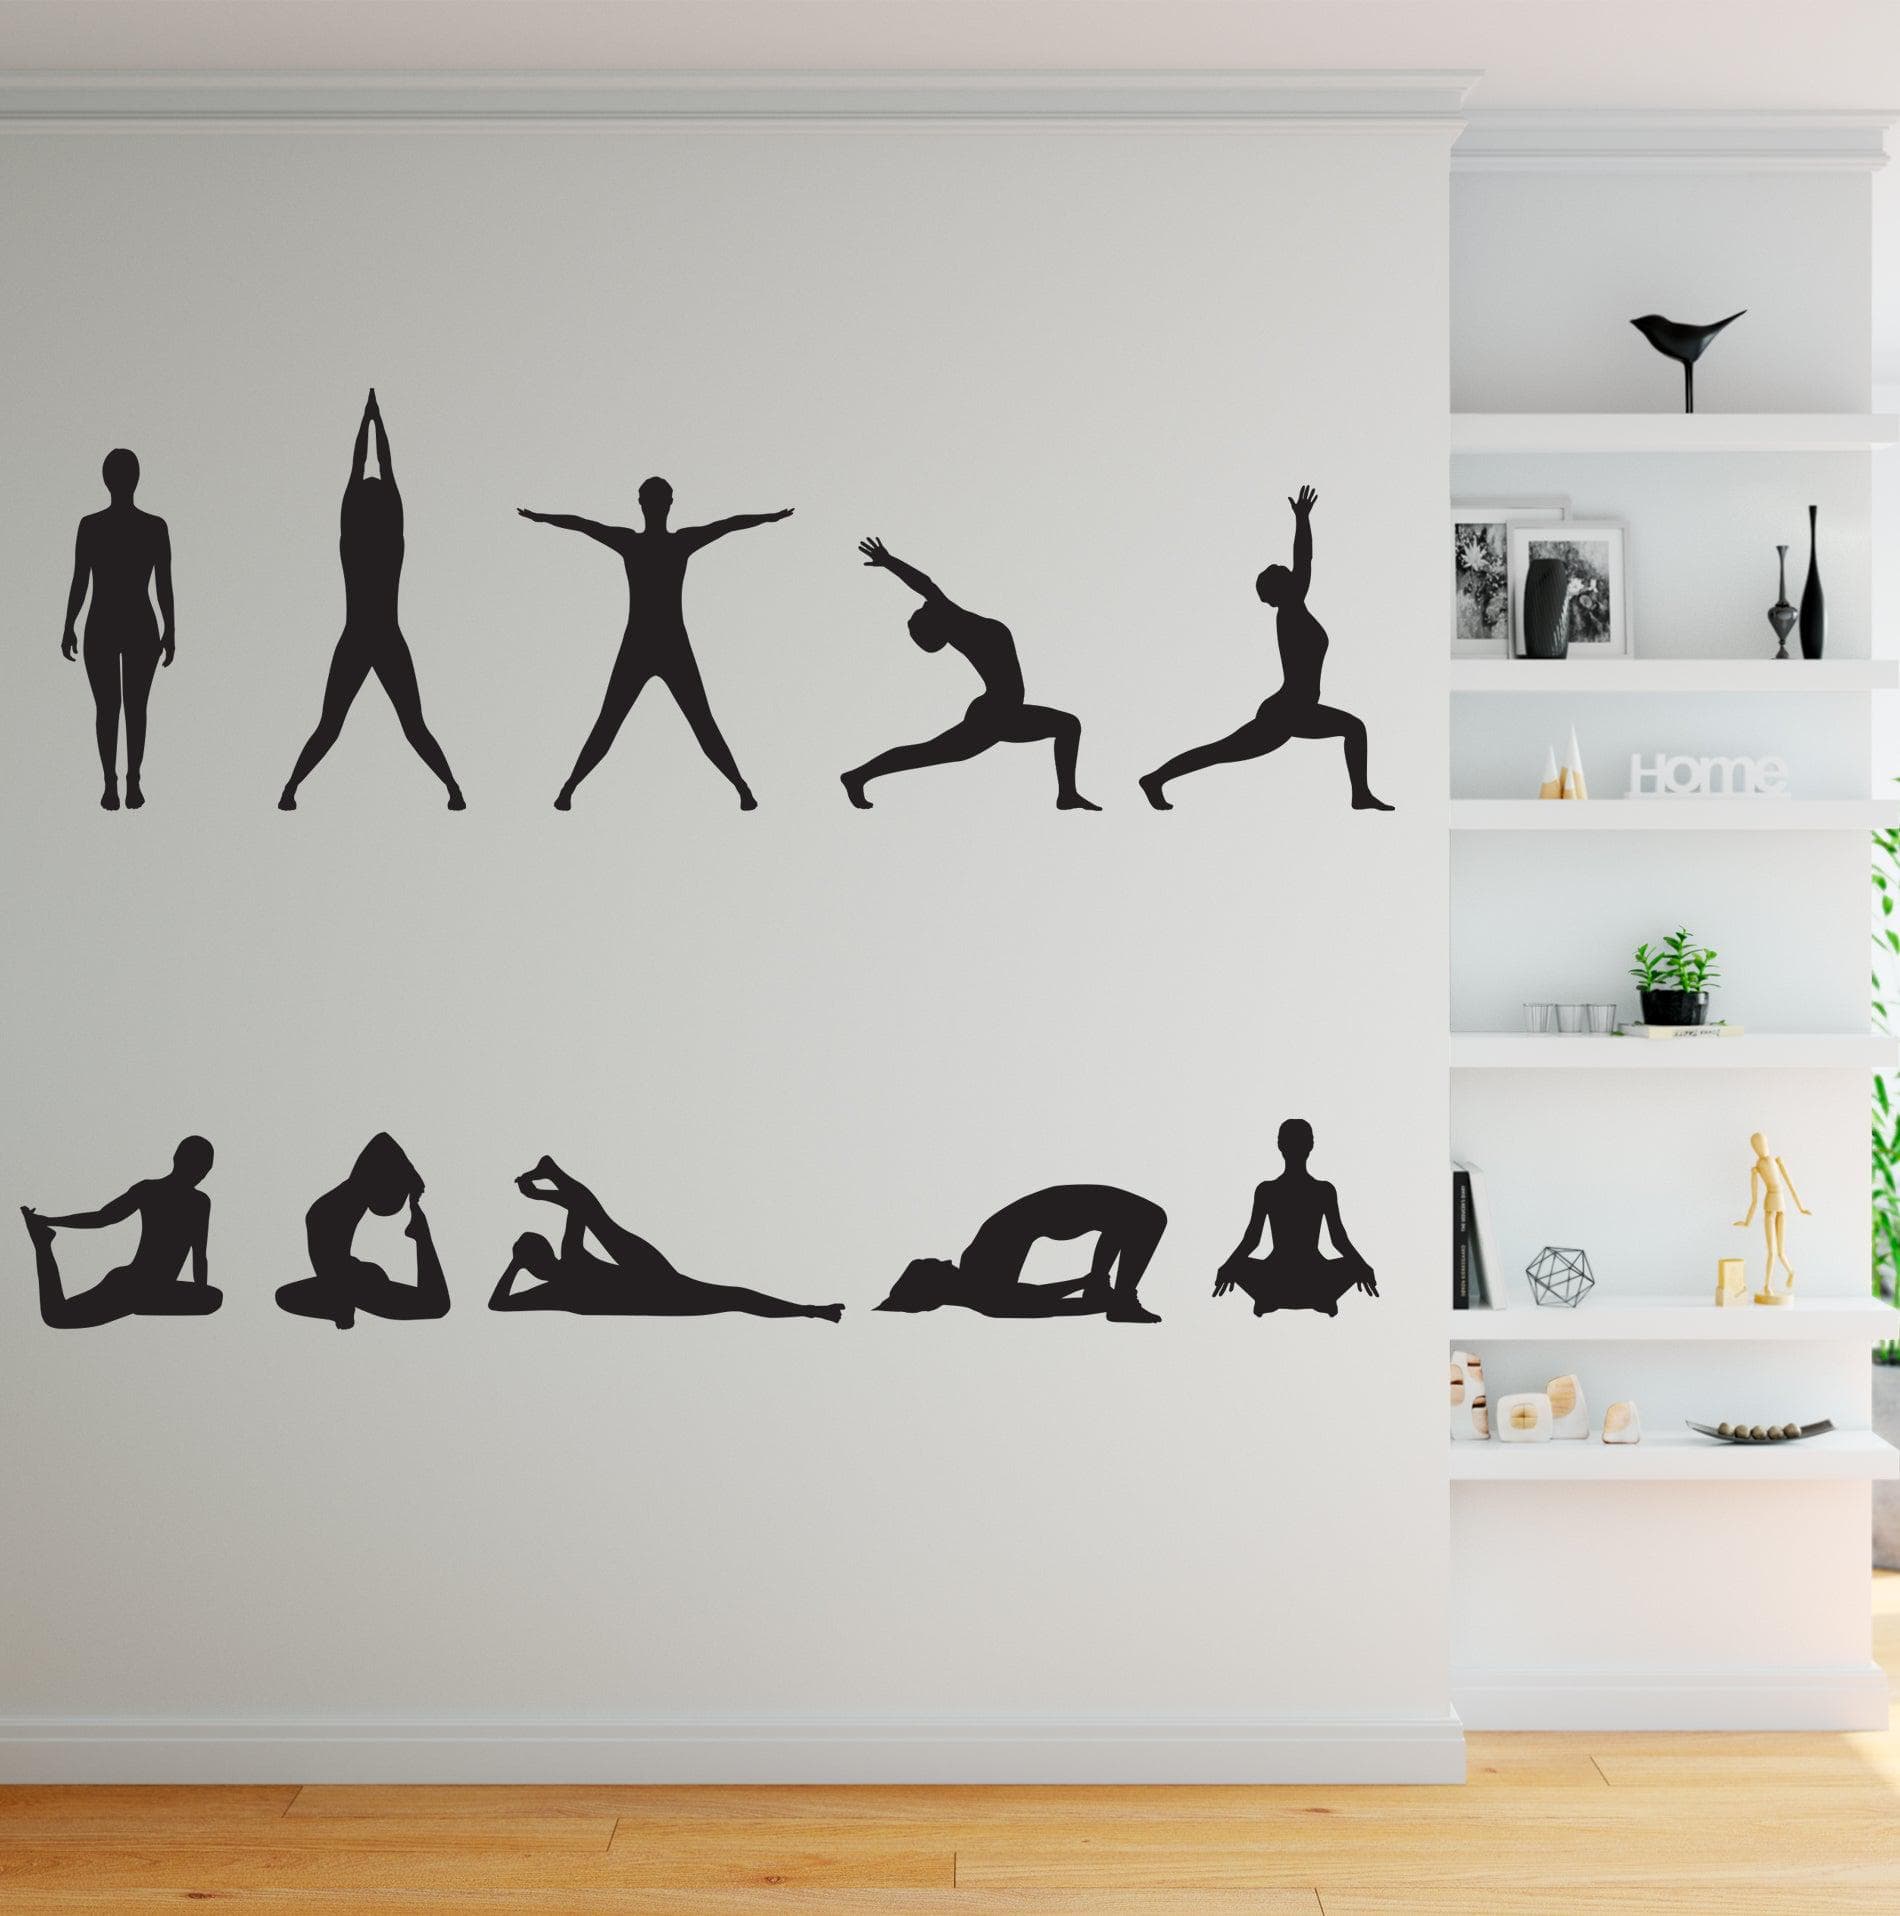 Yoga Poses With The Help Of A Wall | HerZindagi